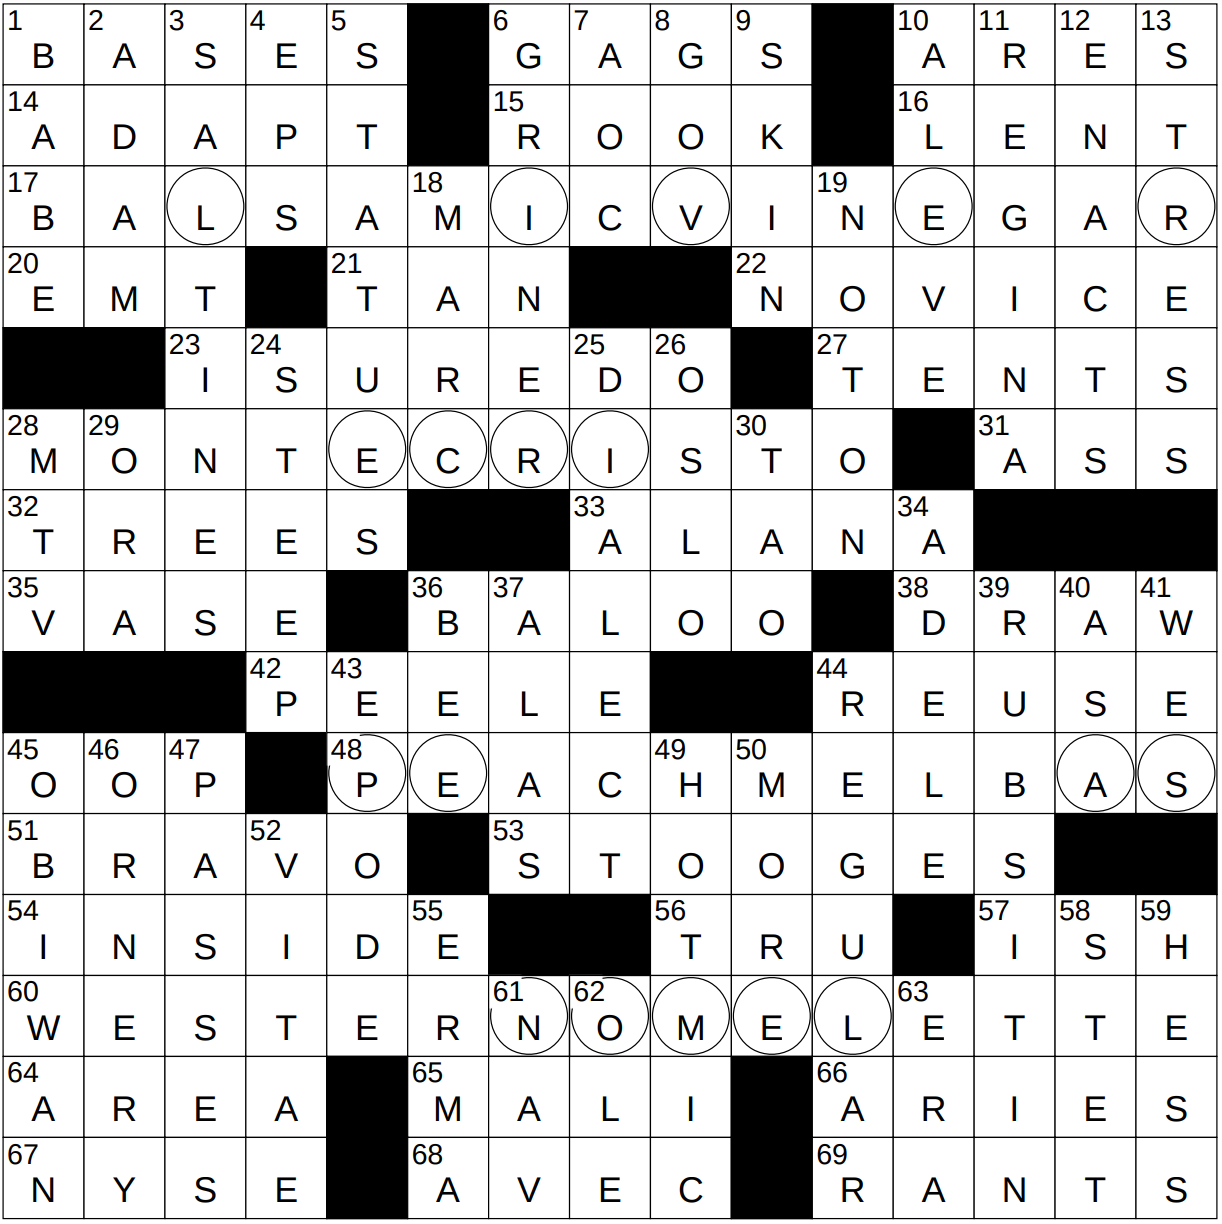 britt alan buck recommends wild party crossword clue pic